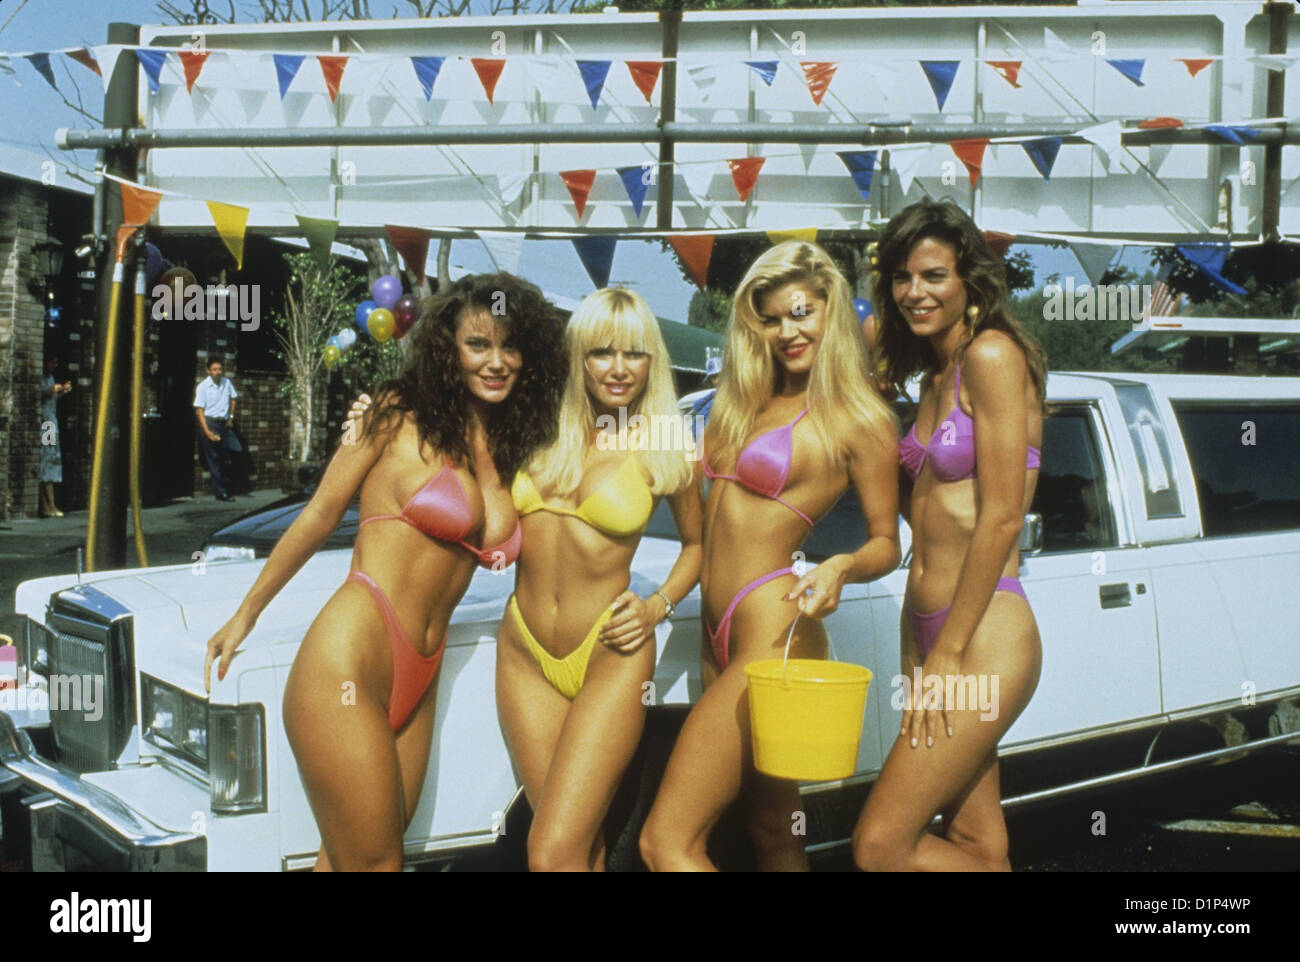 Bikini car wash ii hi-res stock photography and images - Alamy